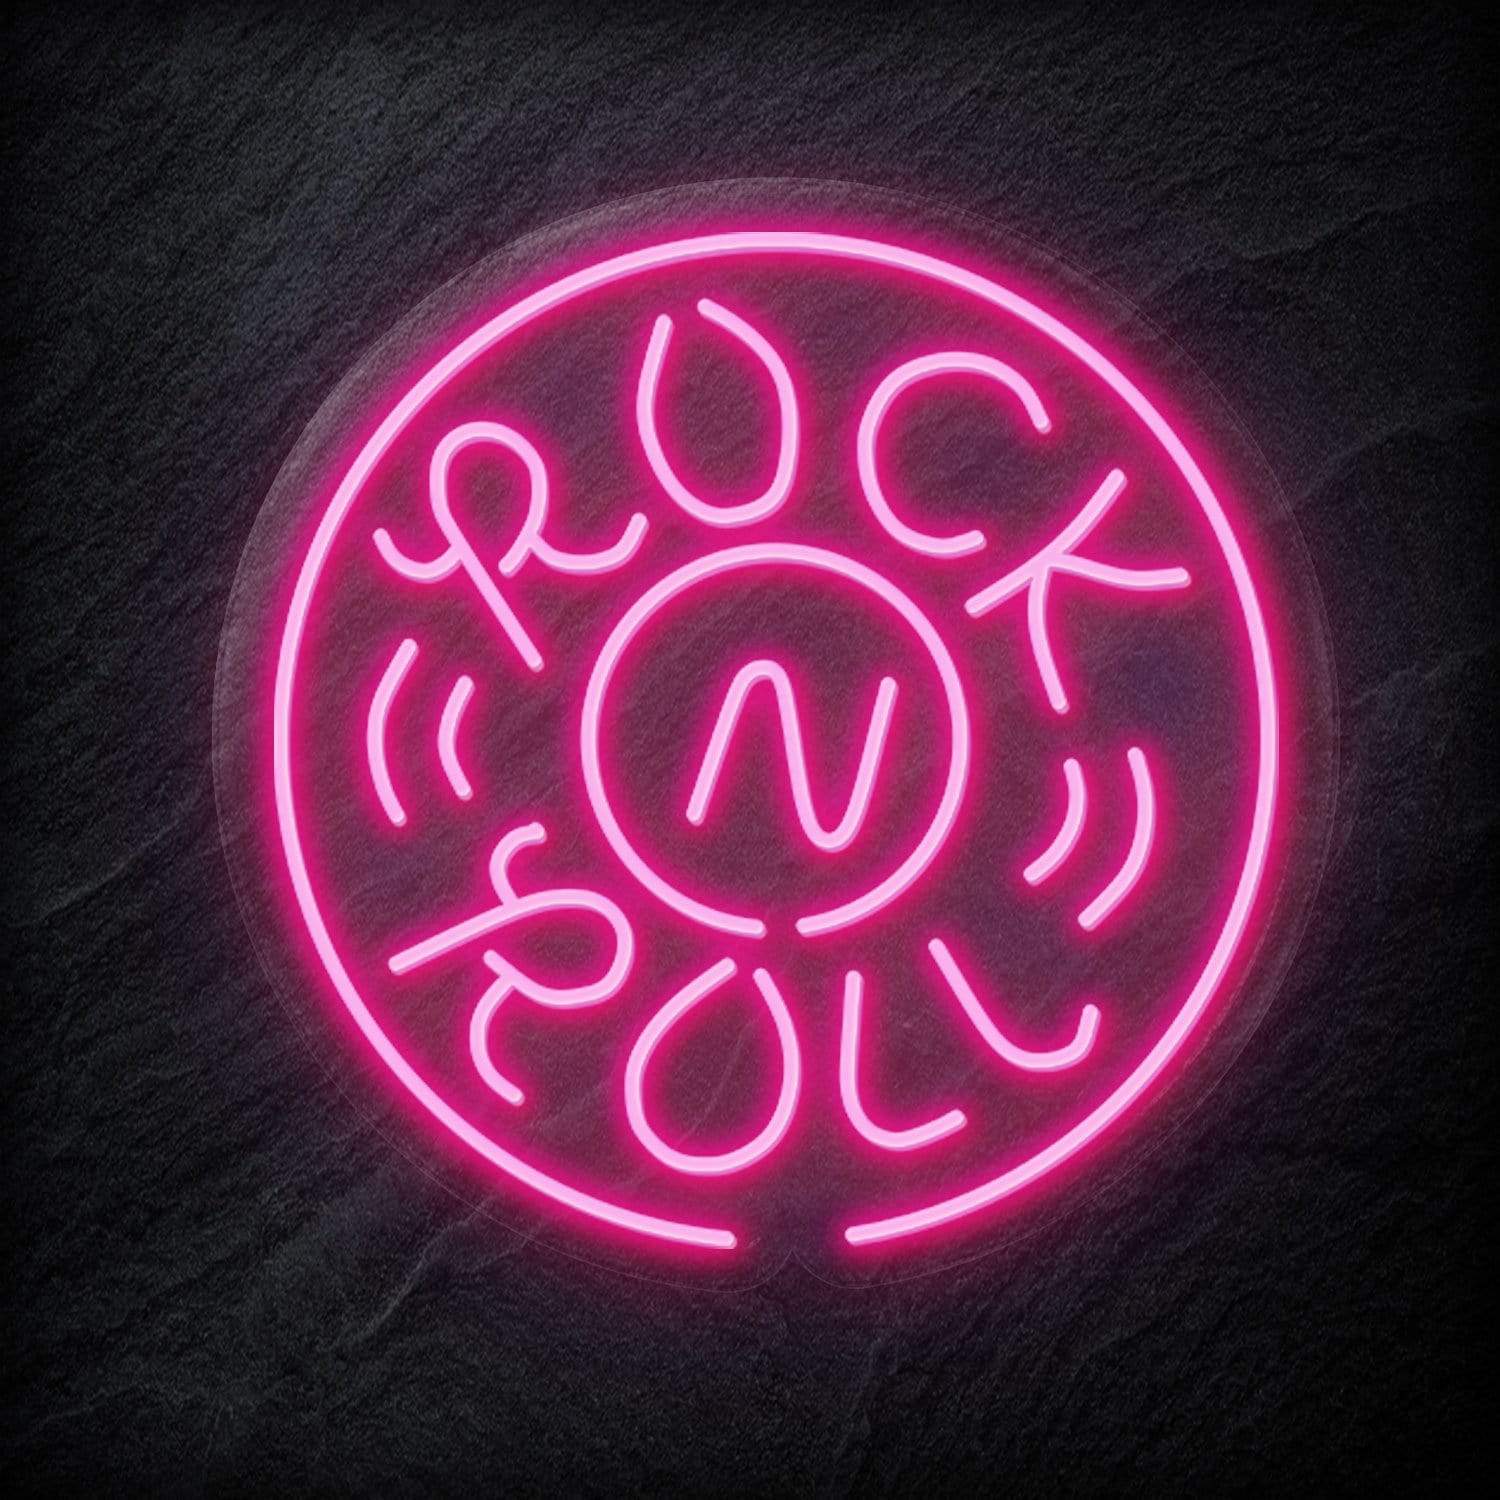 "Rockn Roll Musik" LED Neon Schild - NEONEVERGLOW